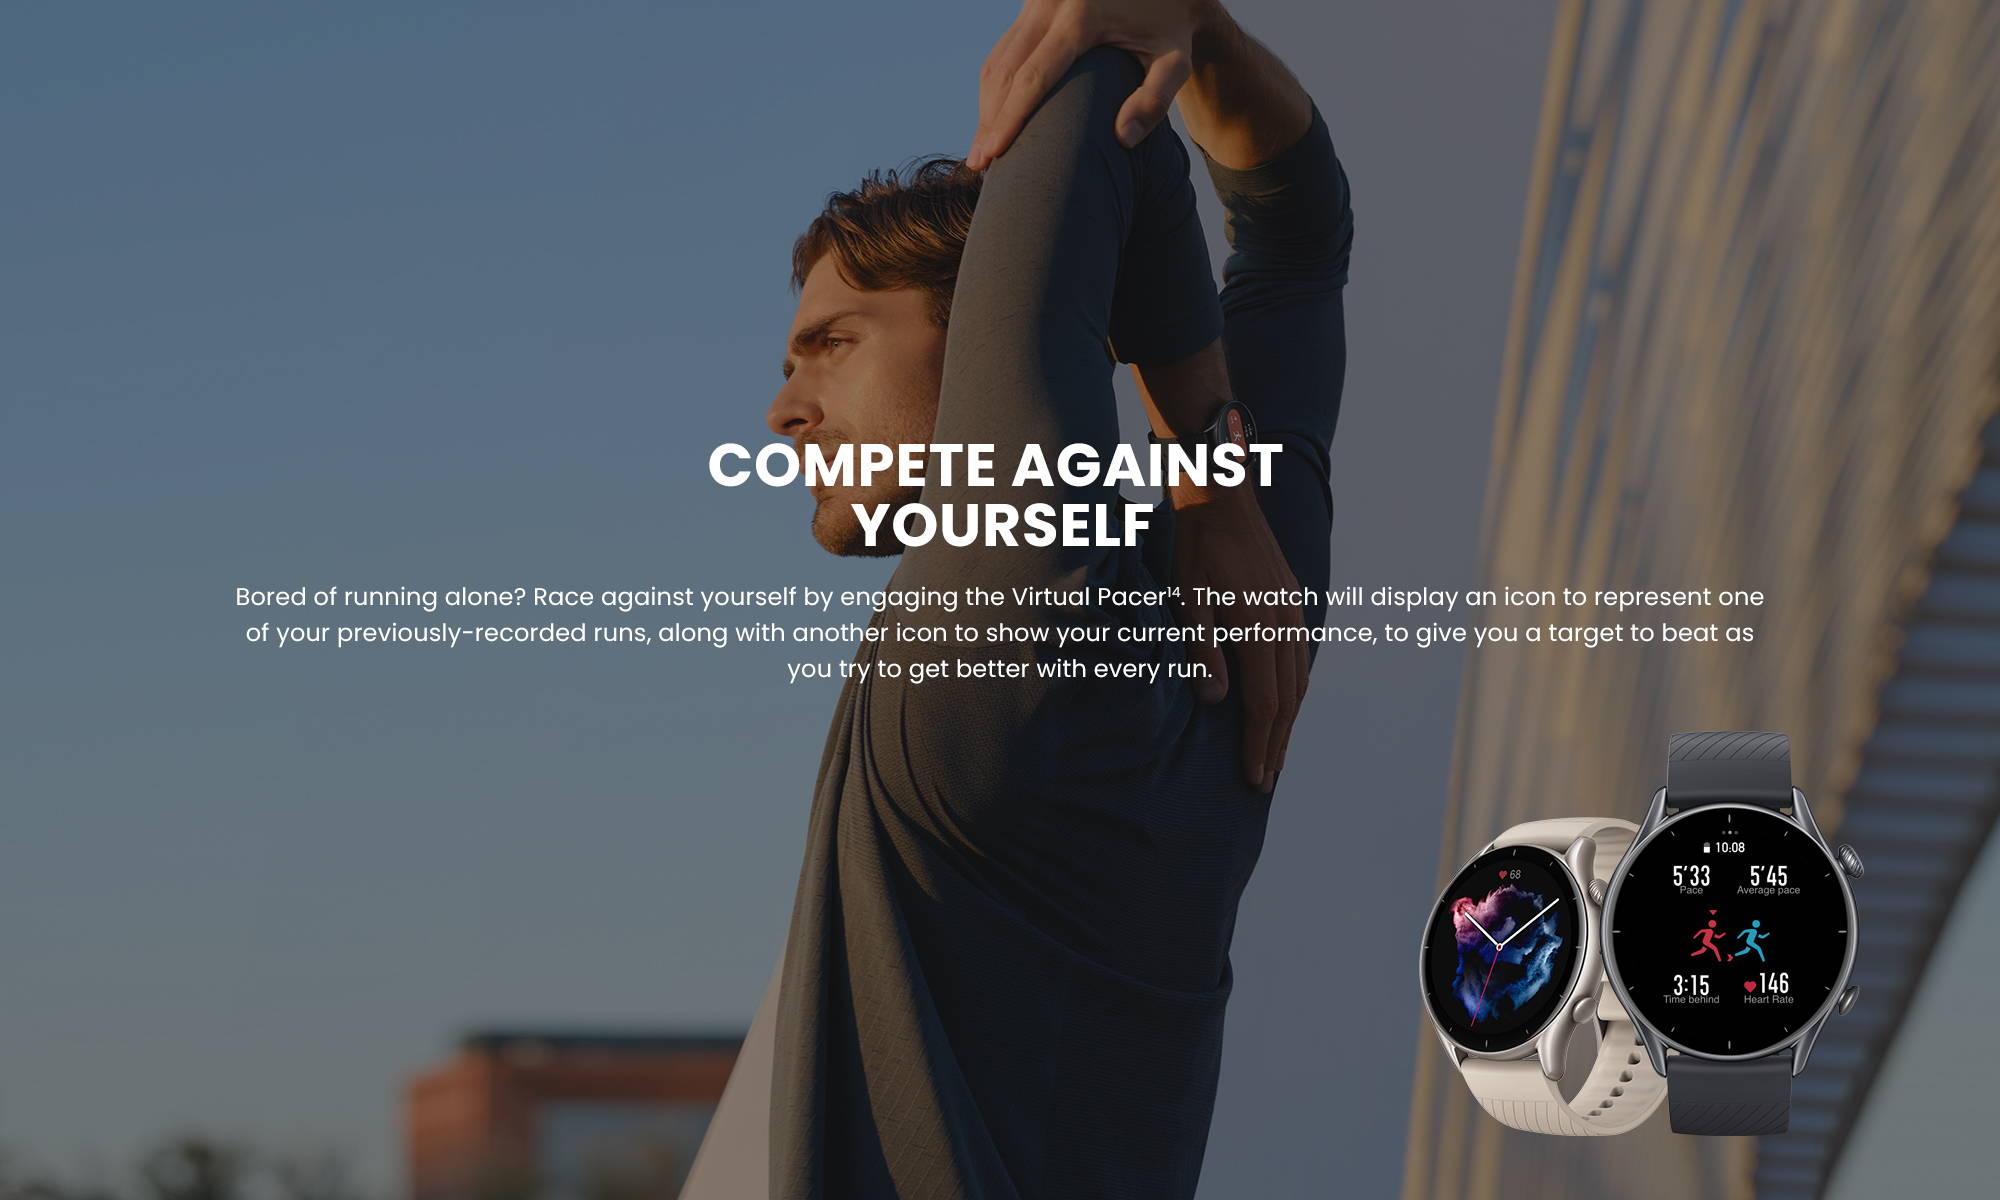 Amazfit US Online Store - GTR 3 Smartwatch